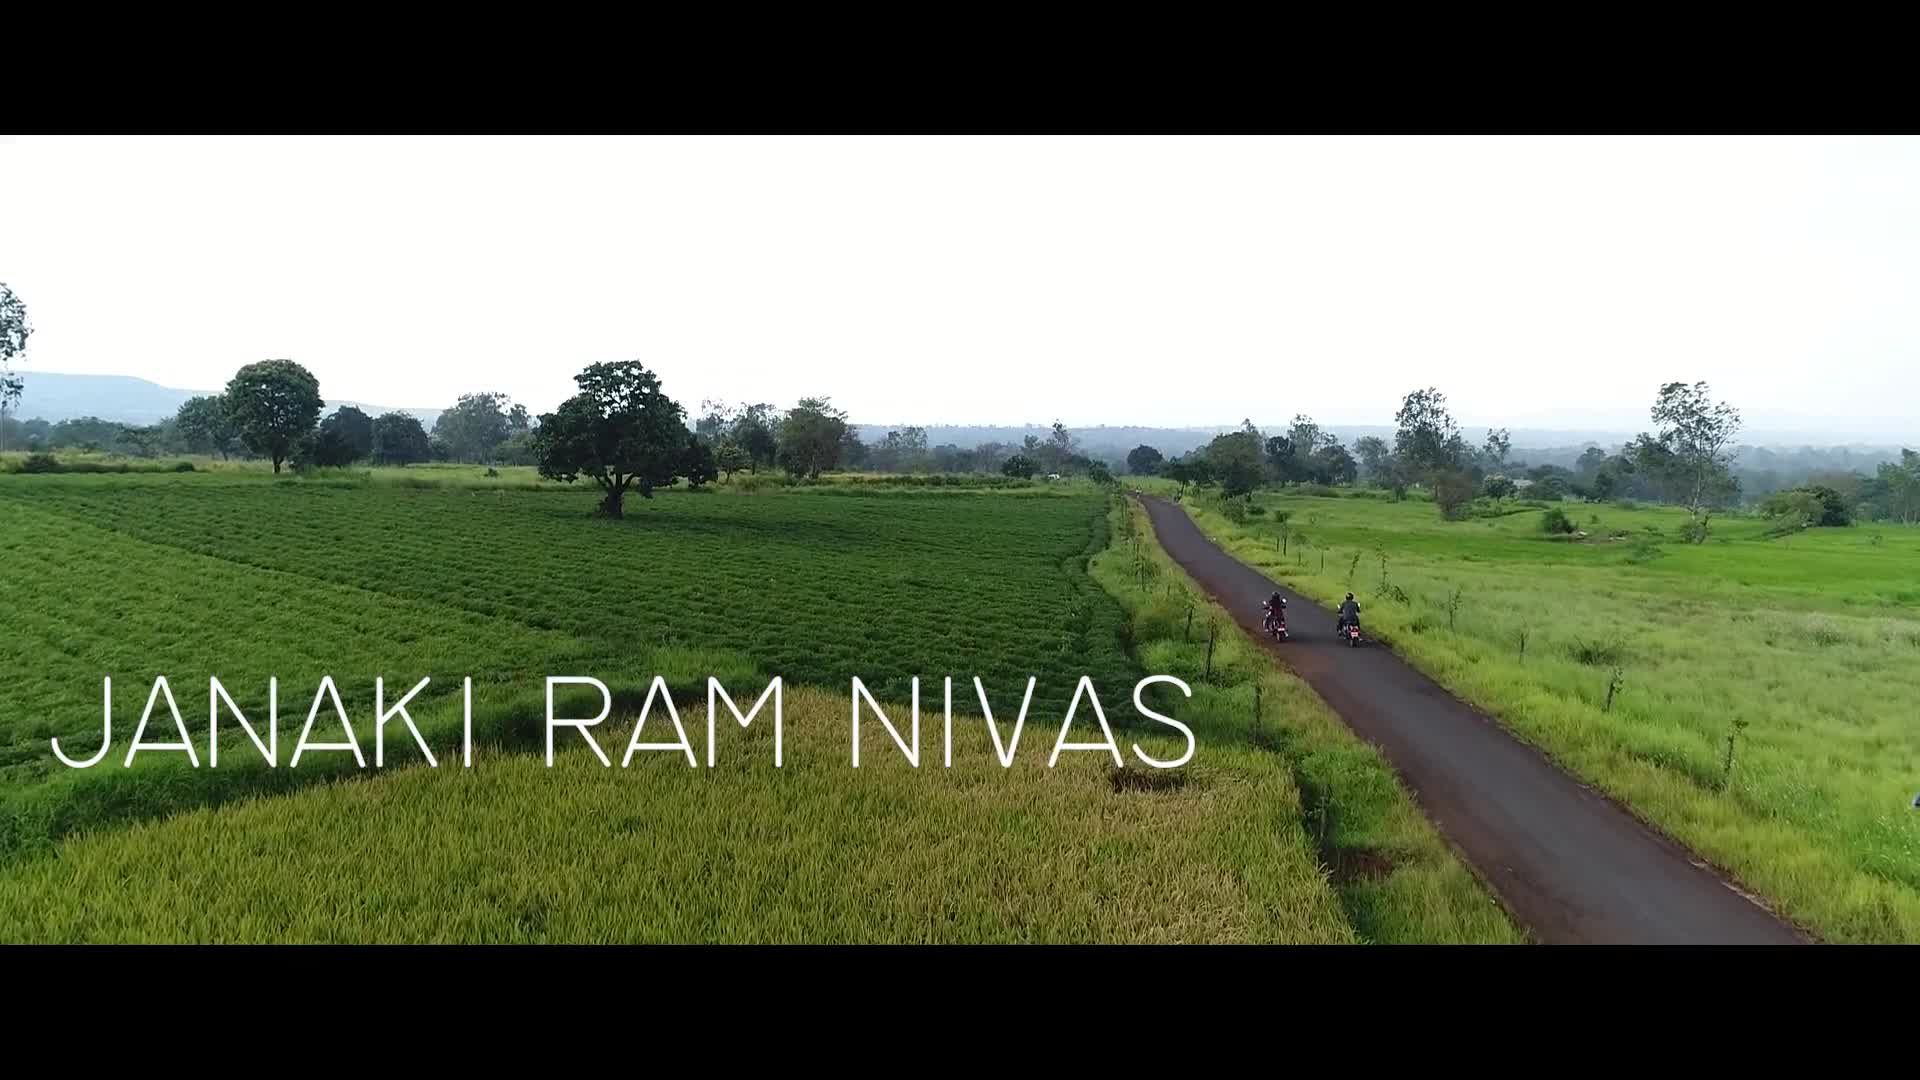 Janaki Ram Nivas